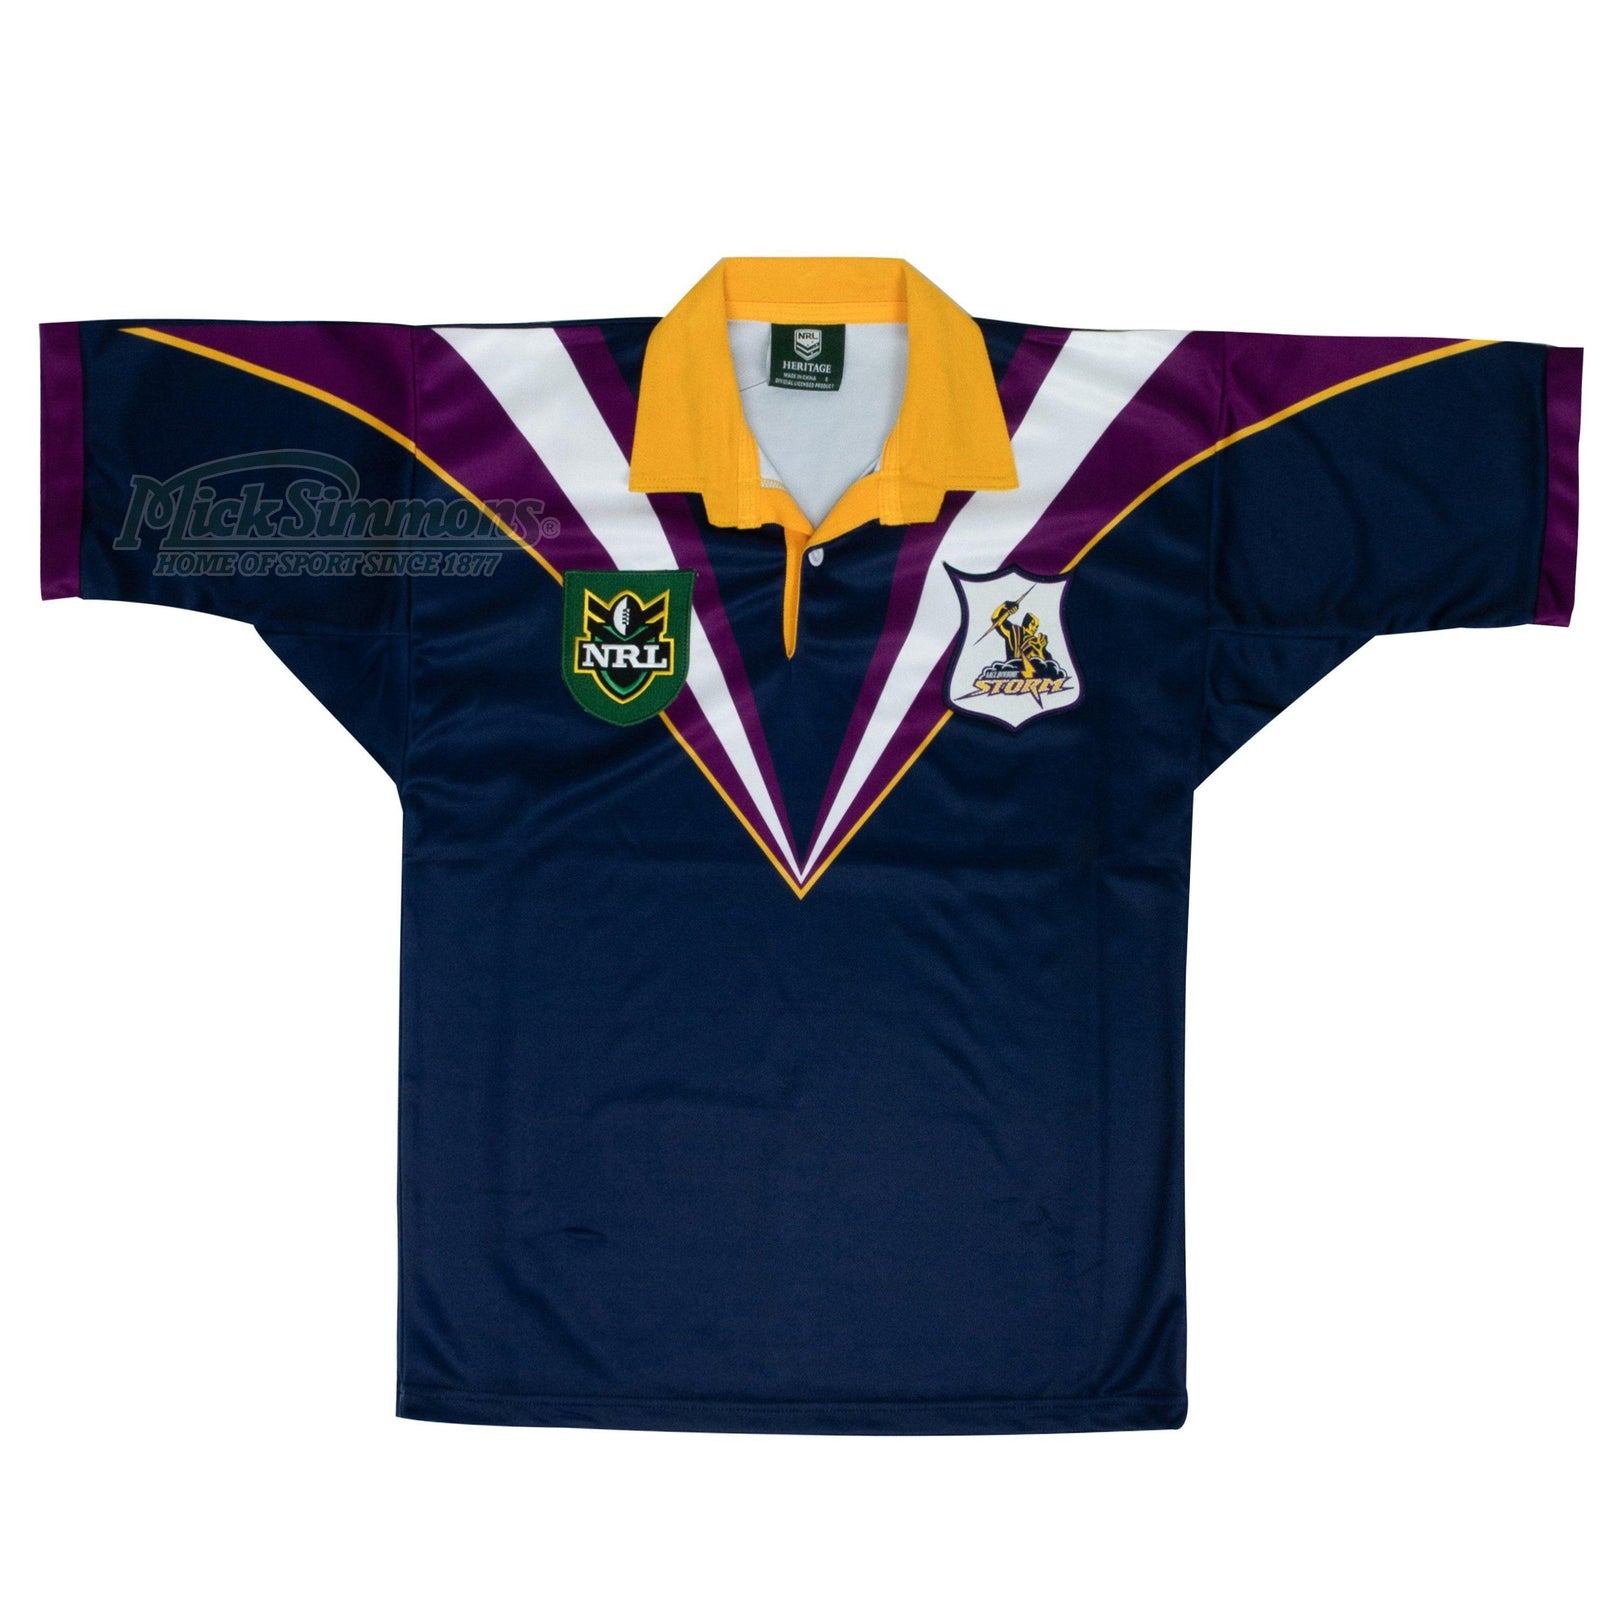 Classic Rugby Shirts  1998 Melbourne Storm Vintage Old NRL Jerseys